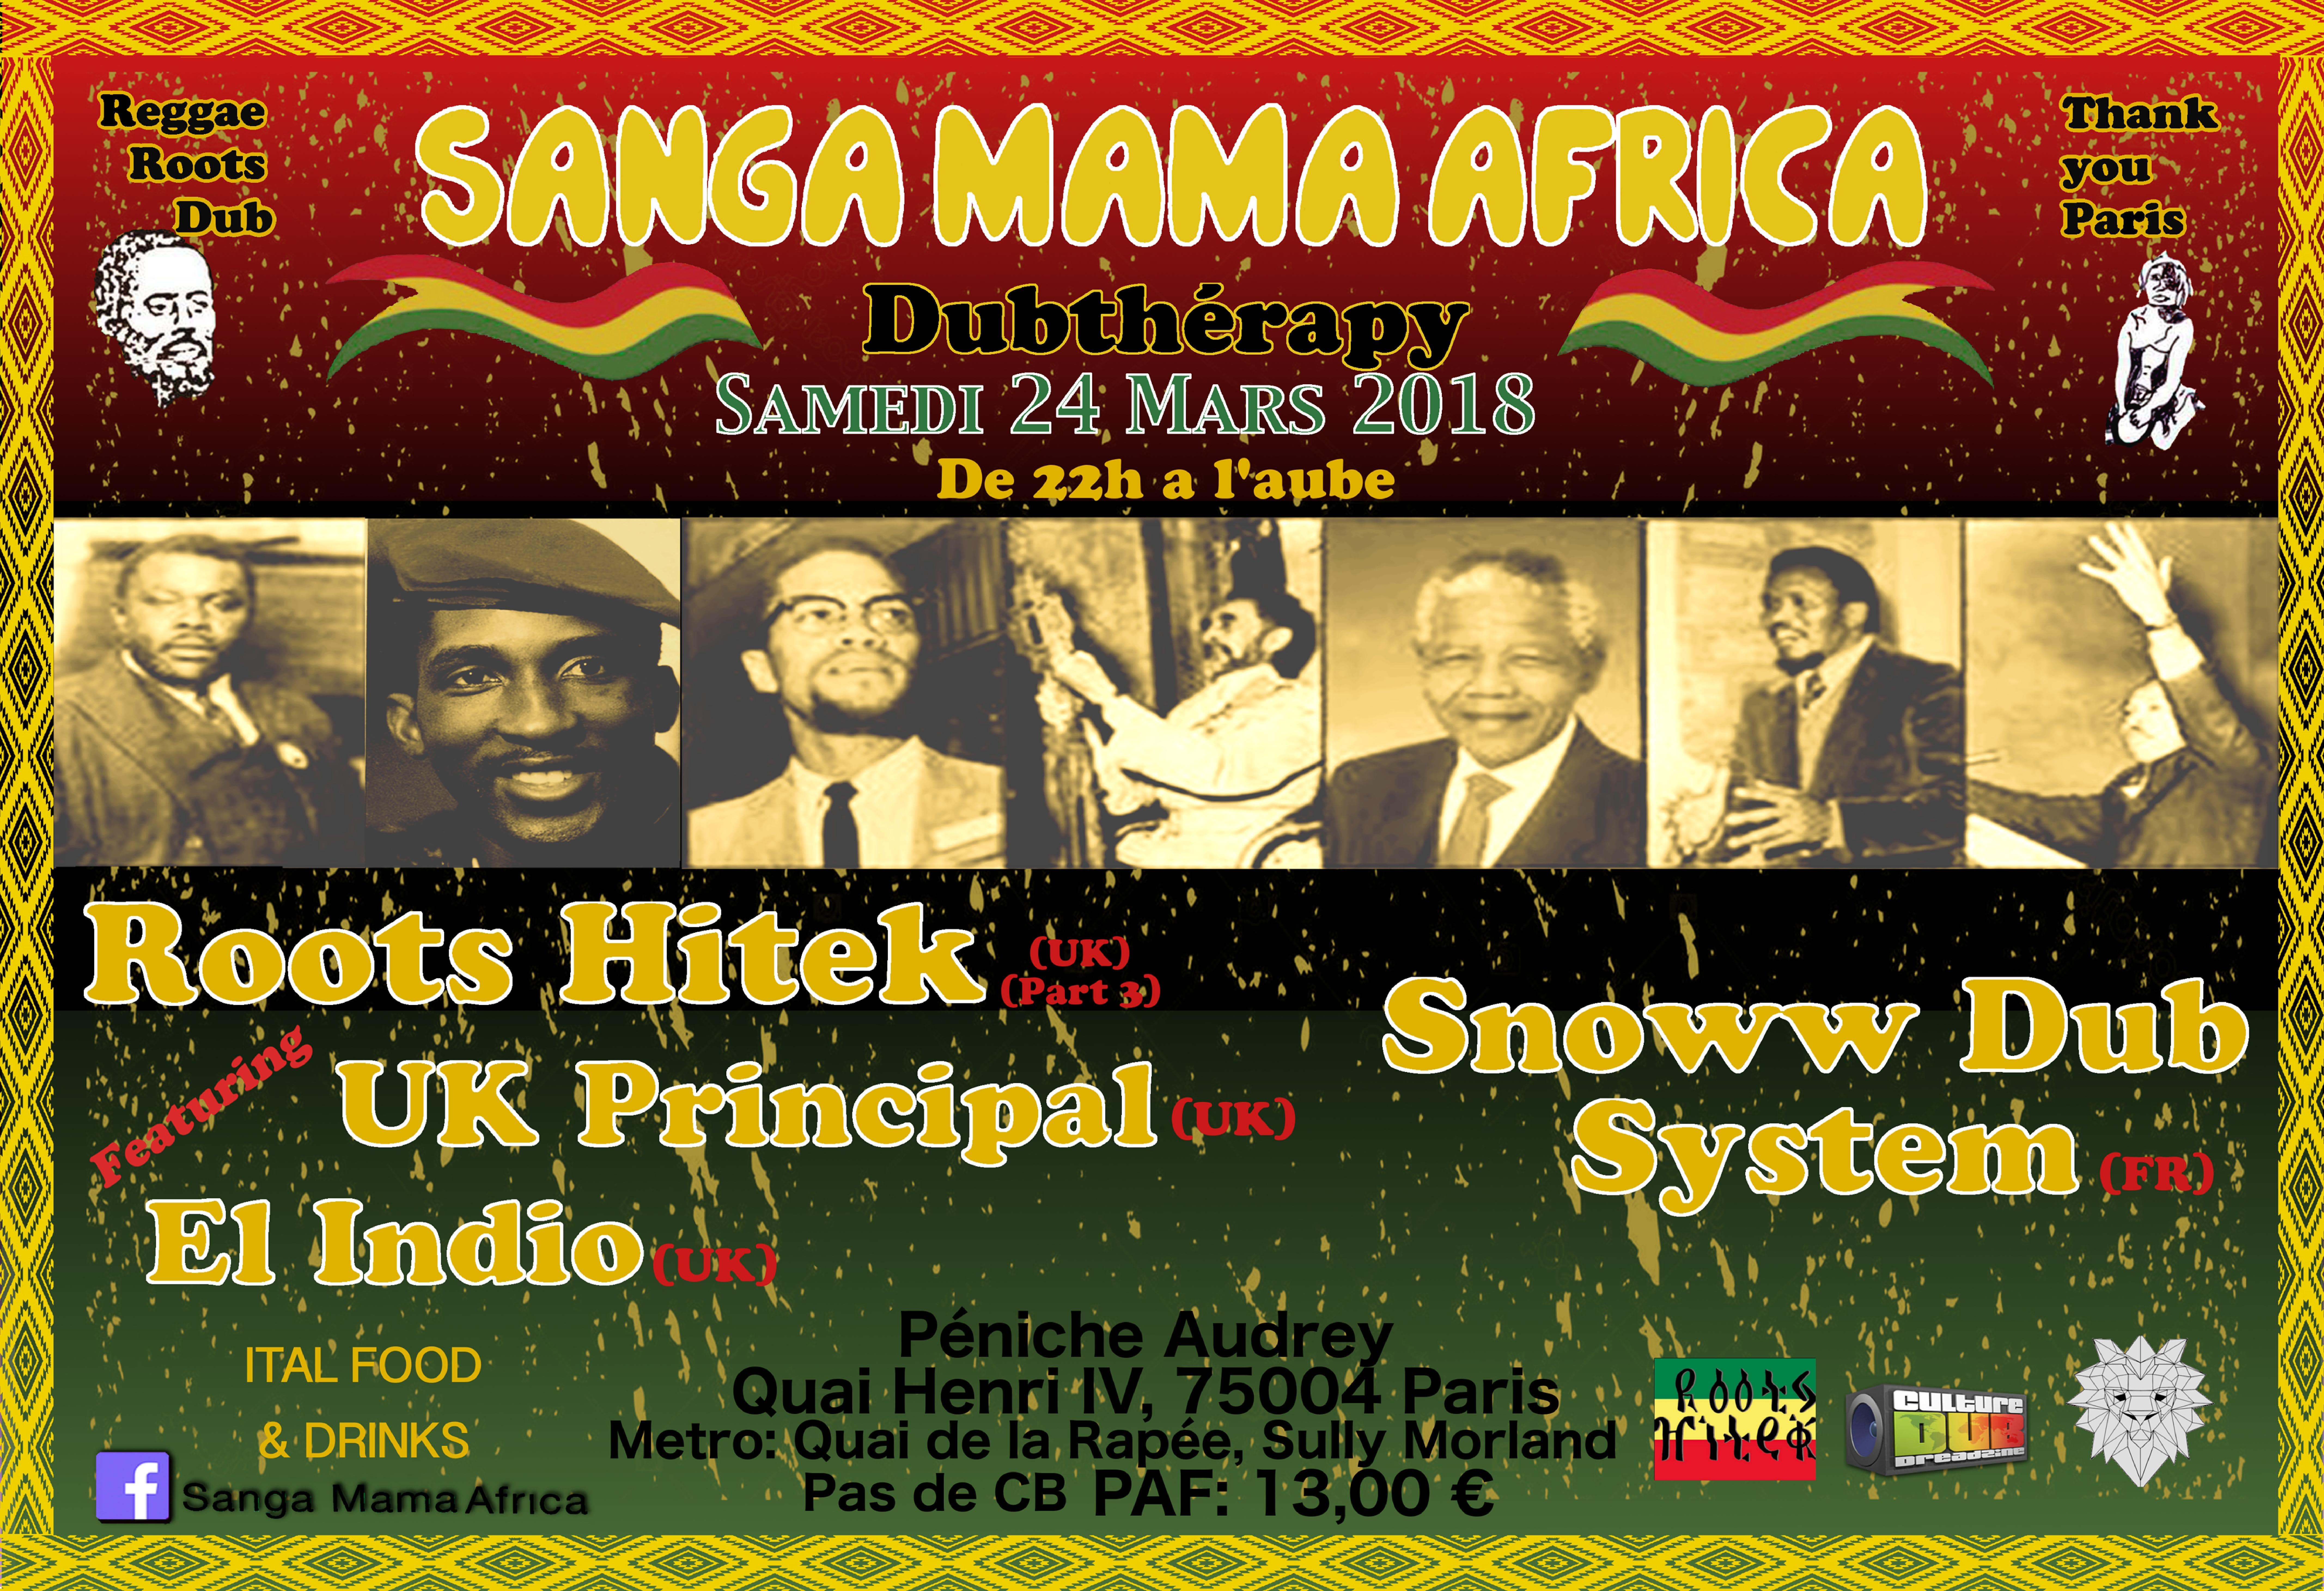 Sanga Mama Africa & Roots Hitek